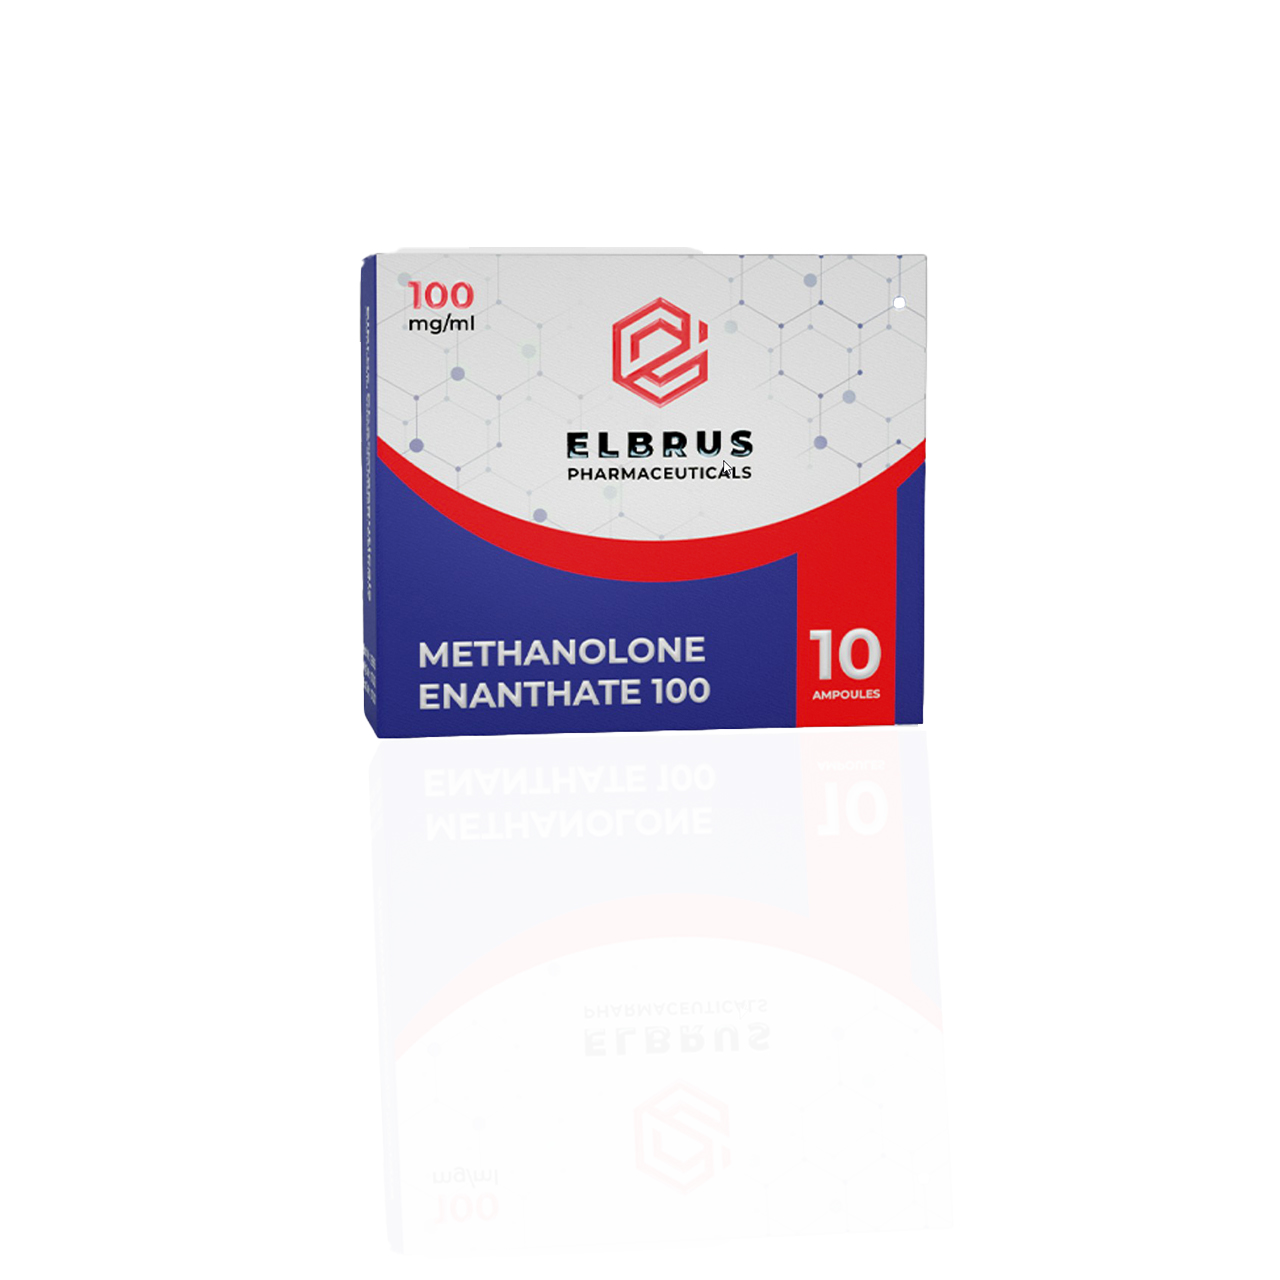 Methenolone Enanthate 100 mg Elbrus Pharmaceuticals Iniezione di steroidi